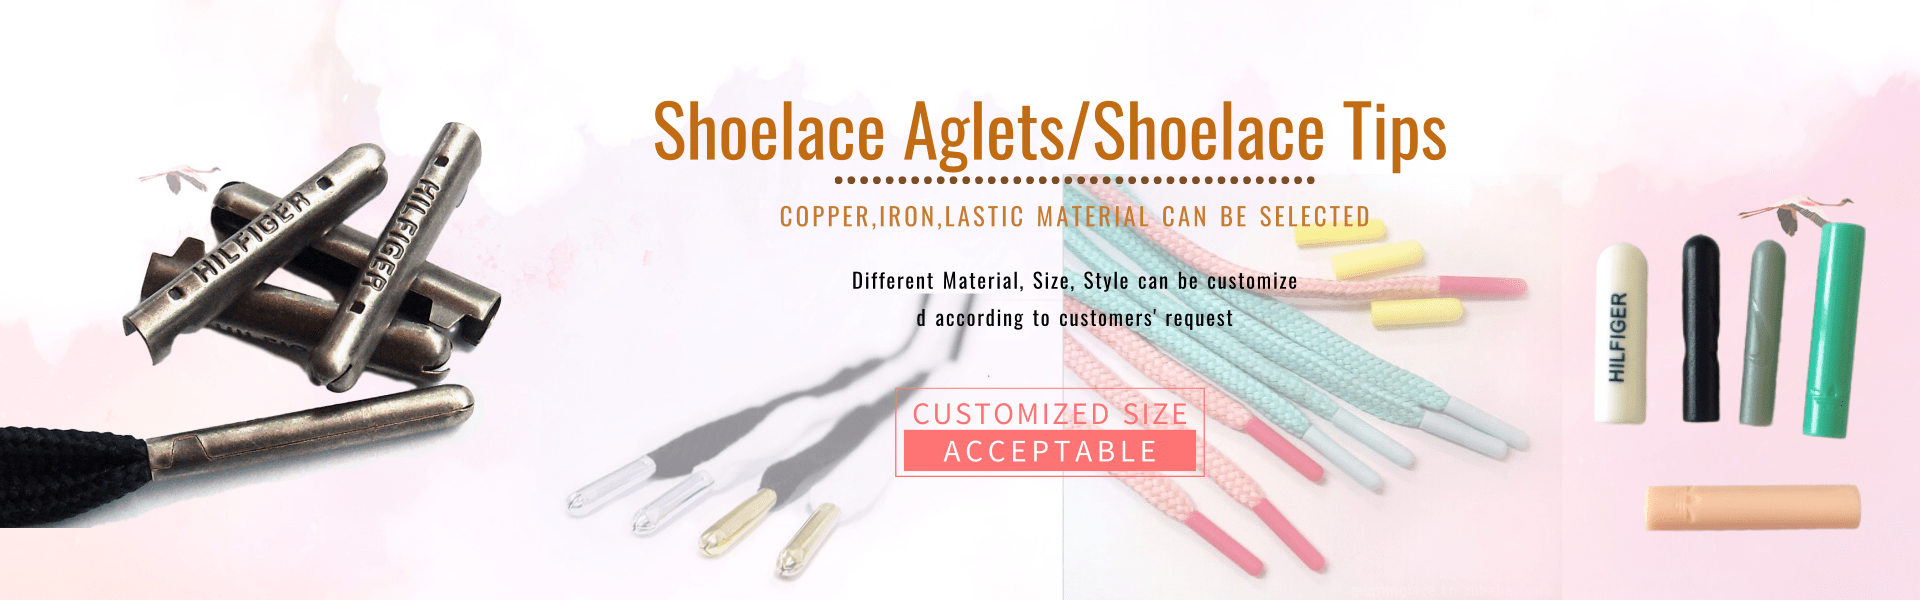 Shoelace Aglets